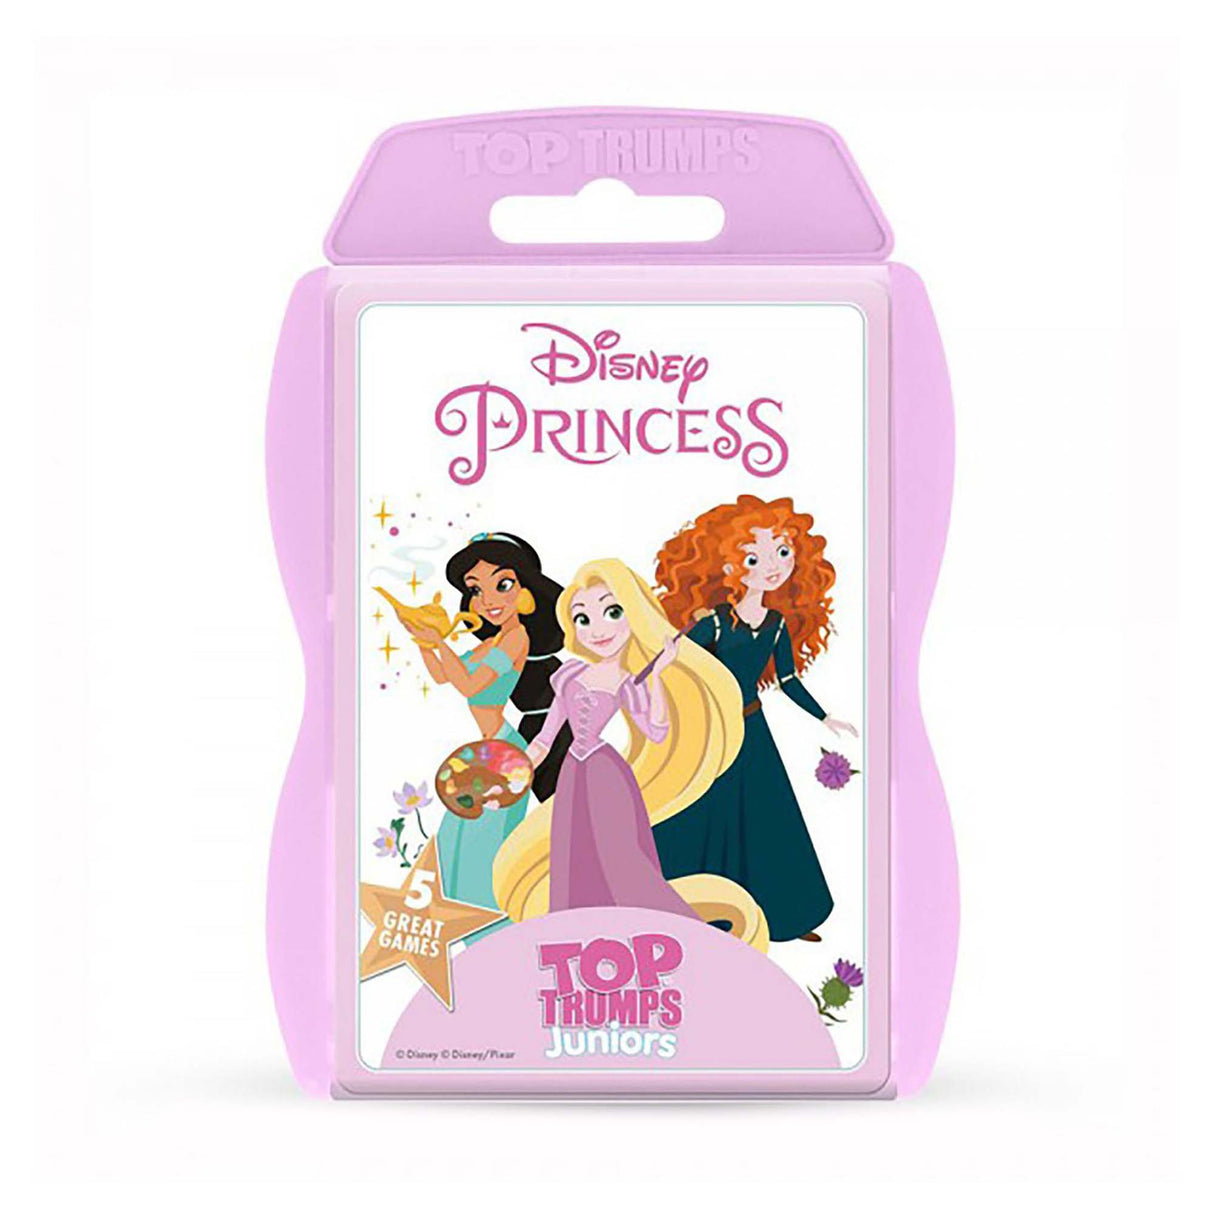 Top Trumps Juniors Disney Princess Card Game